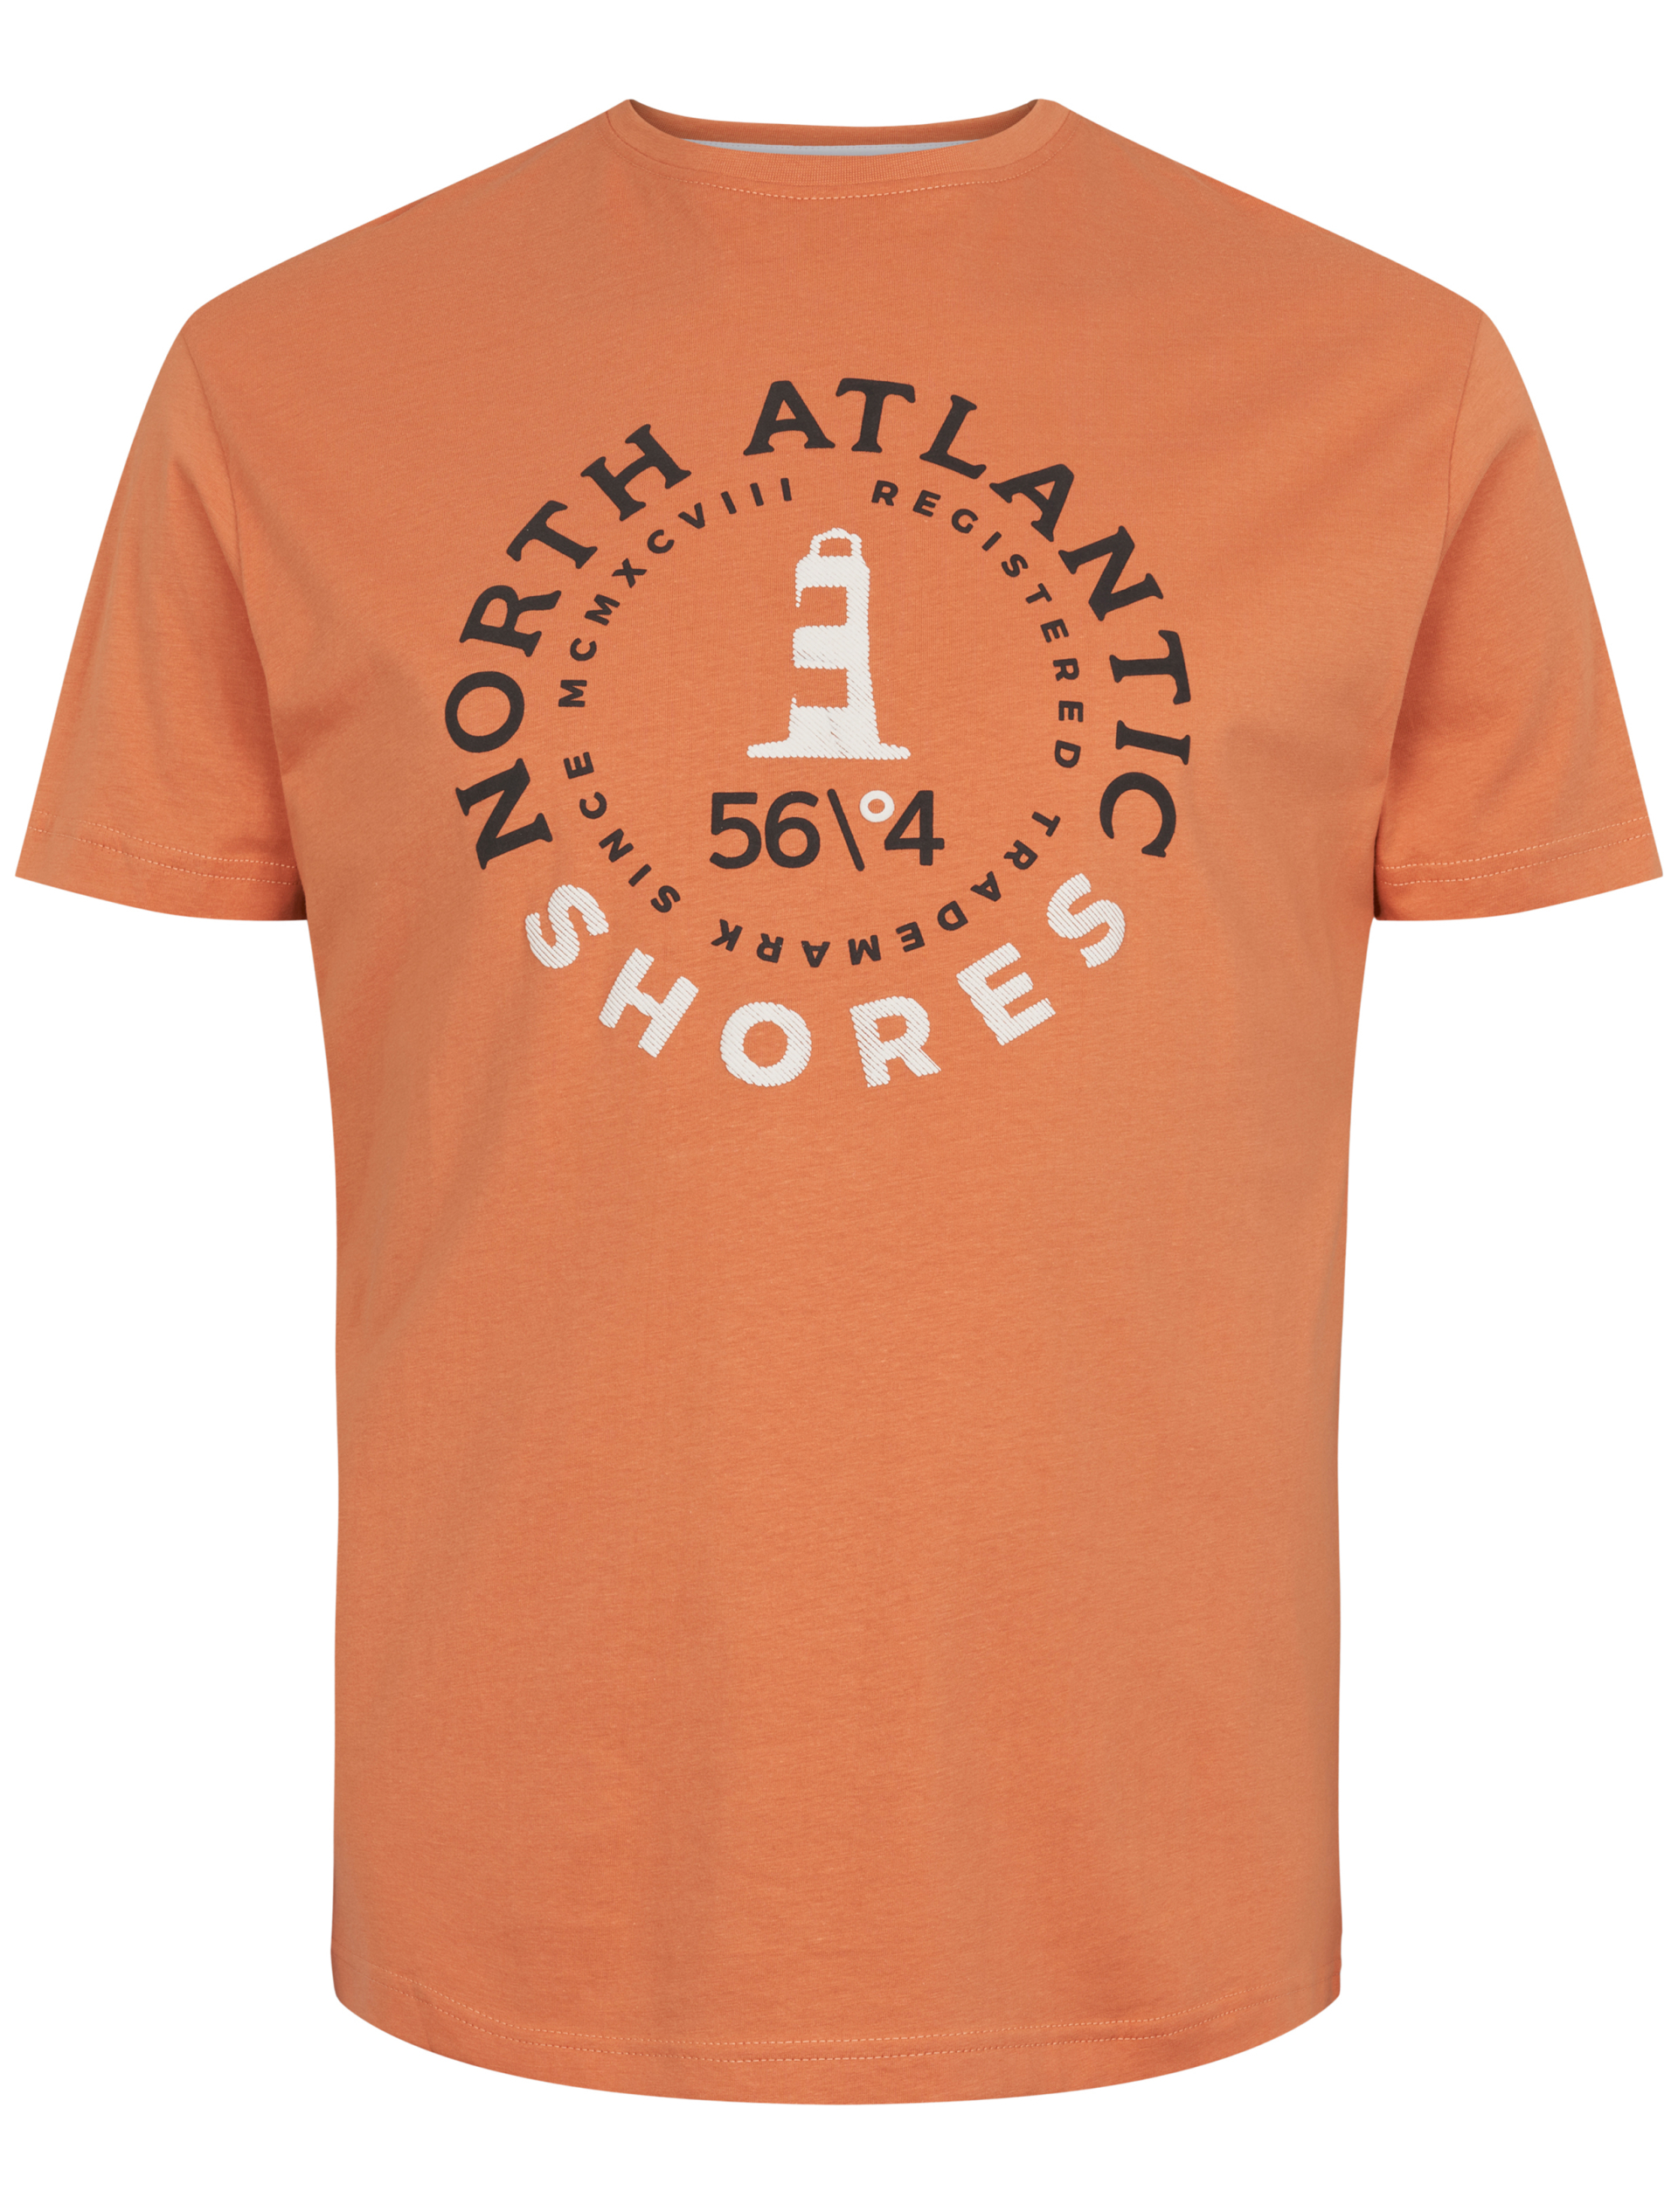 North T-shirt orange / 0201 terracotta